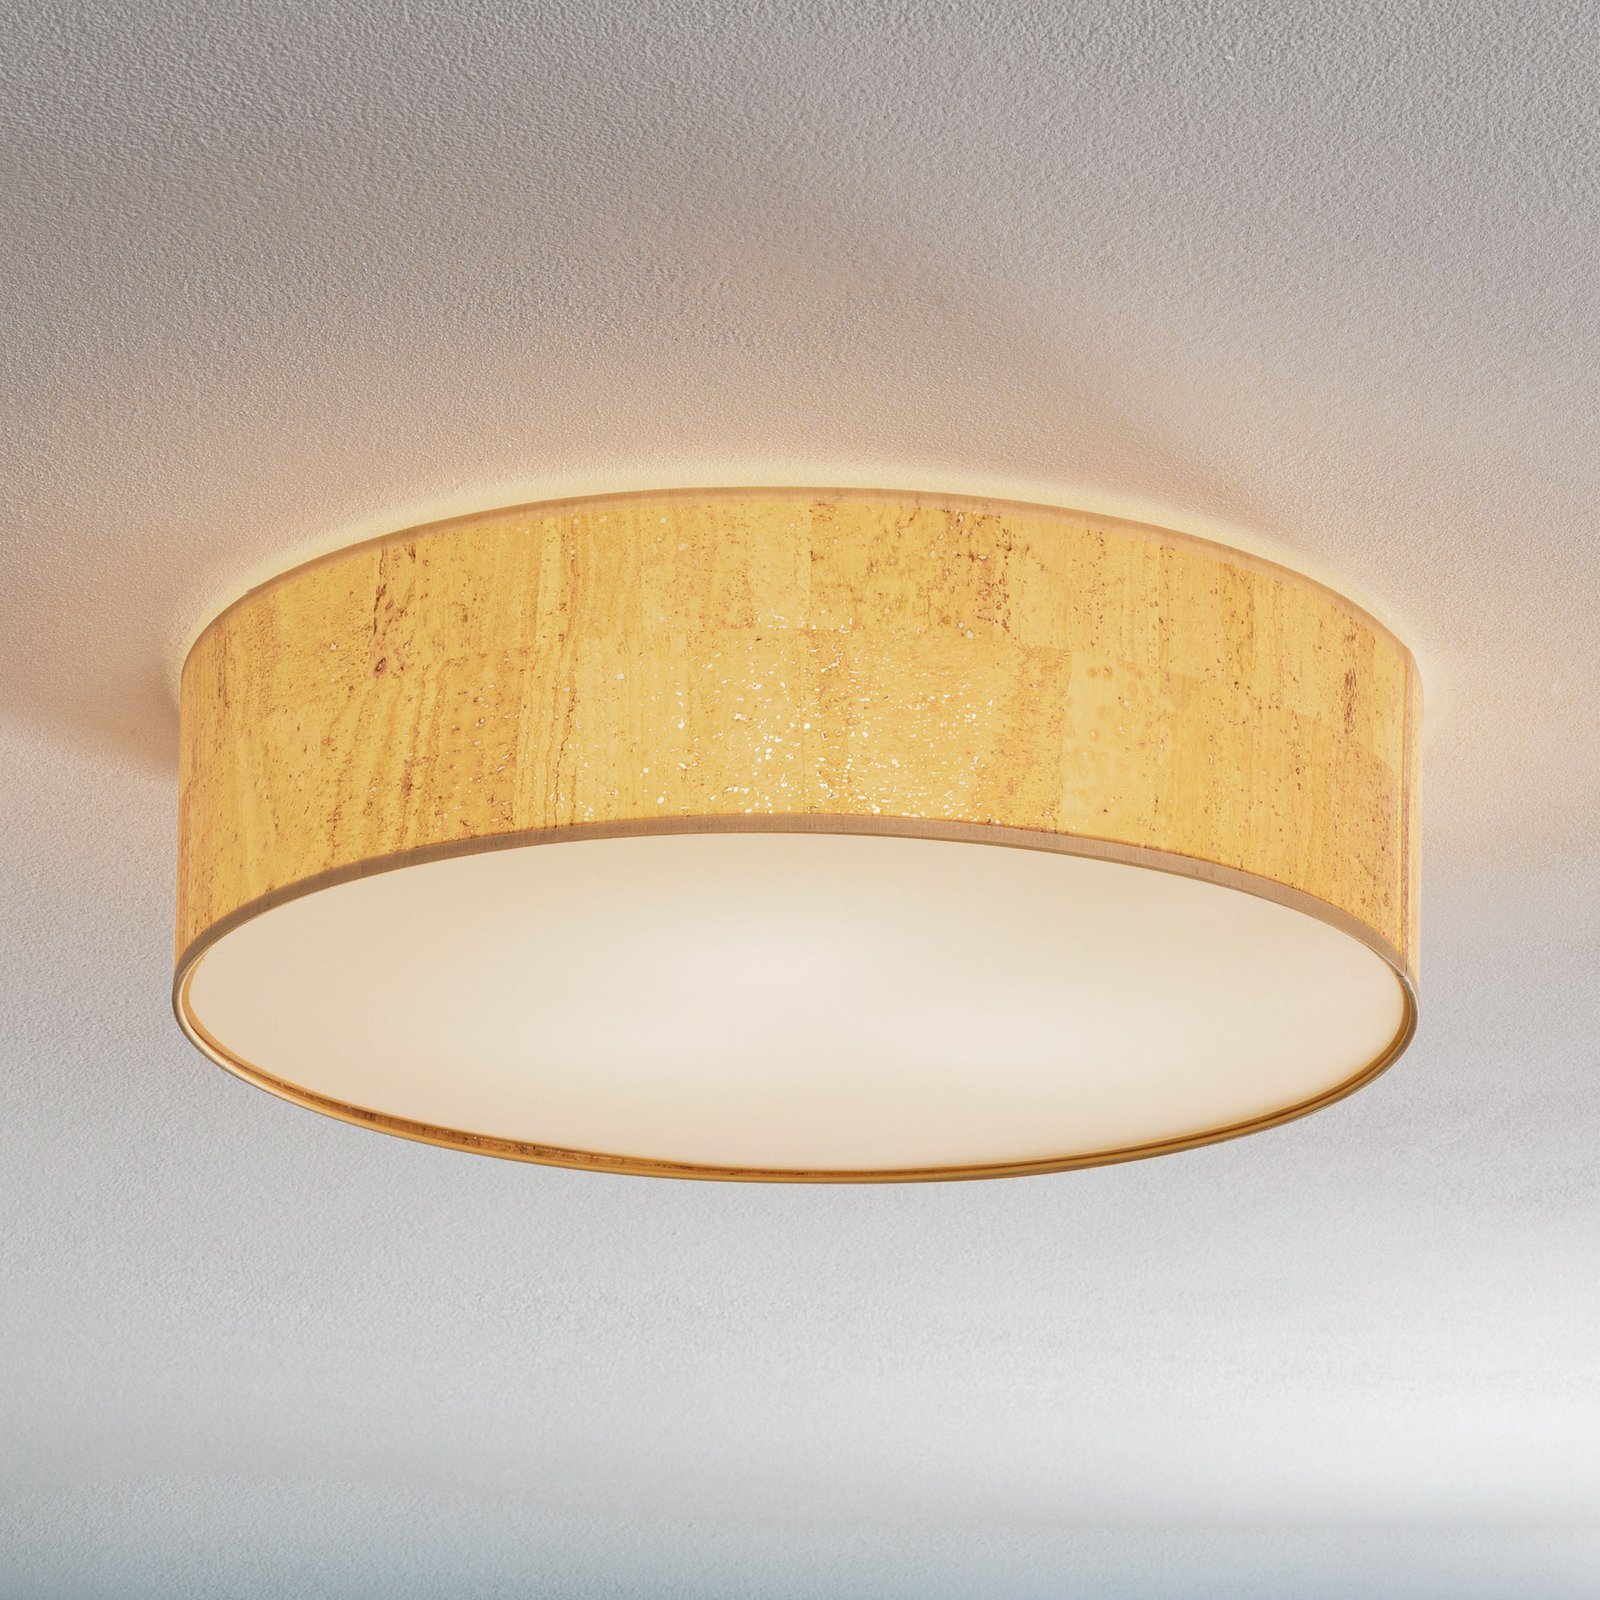 Leano ceiling light brown round cork